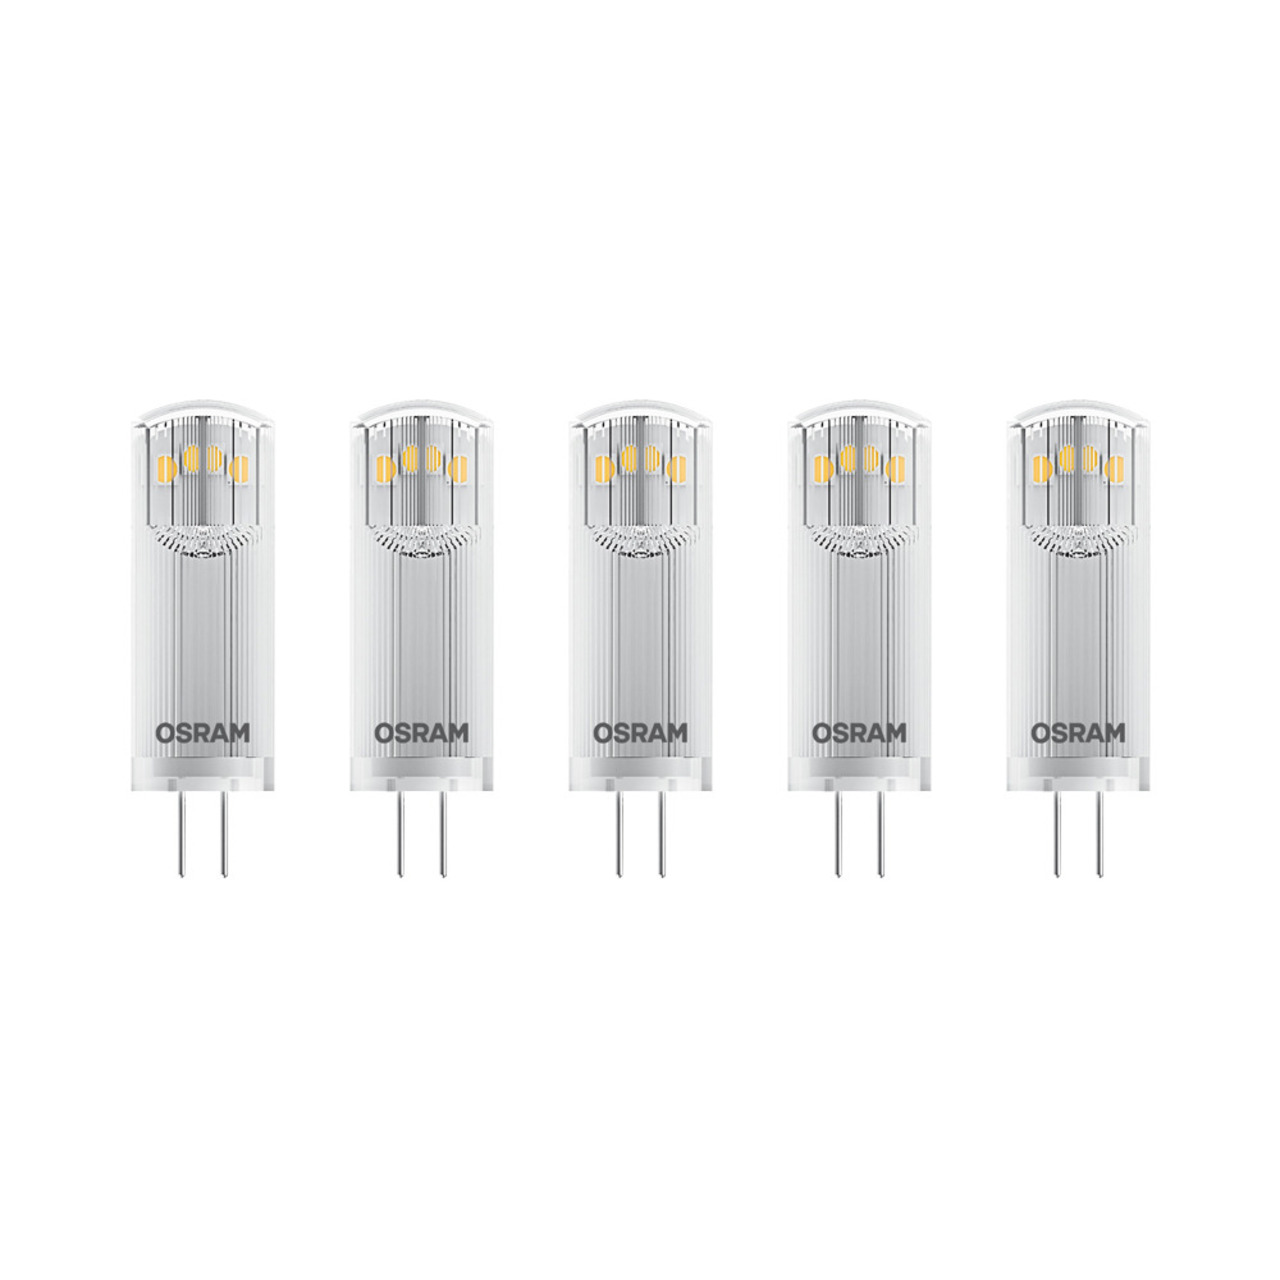 OSRAM 5er Pack 1-8-W-G4-LED-Lampen- warmweiss- 12 V AC